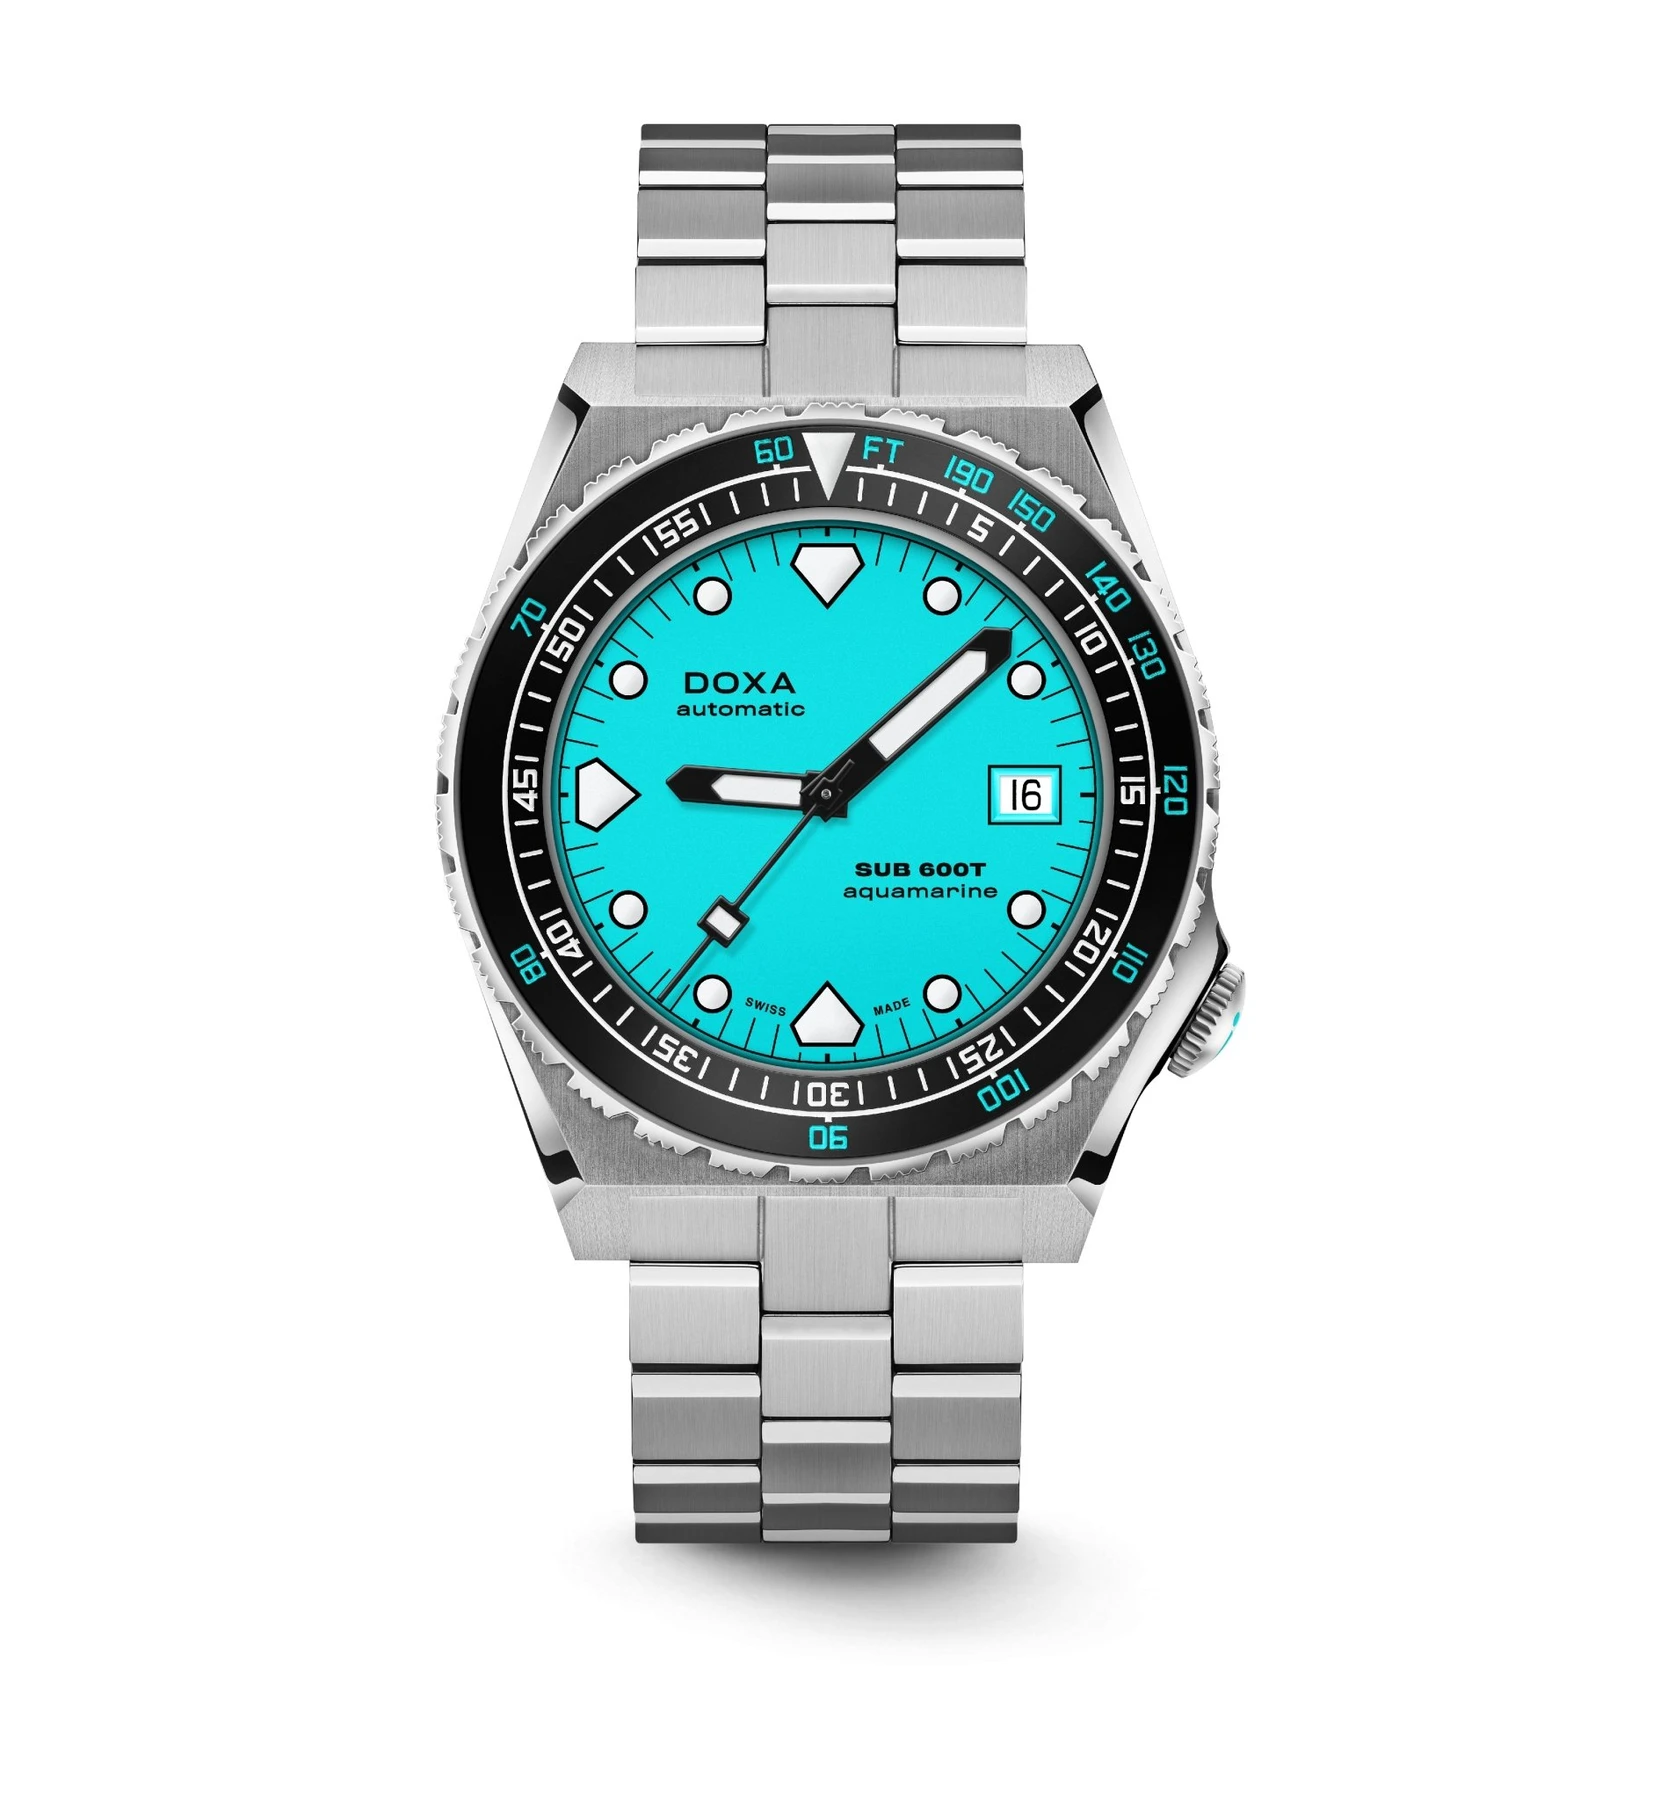 Tiffany blue colored dials